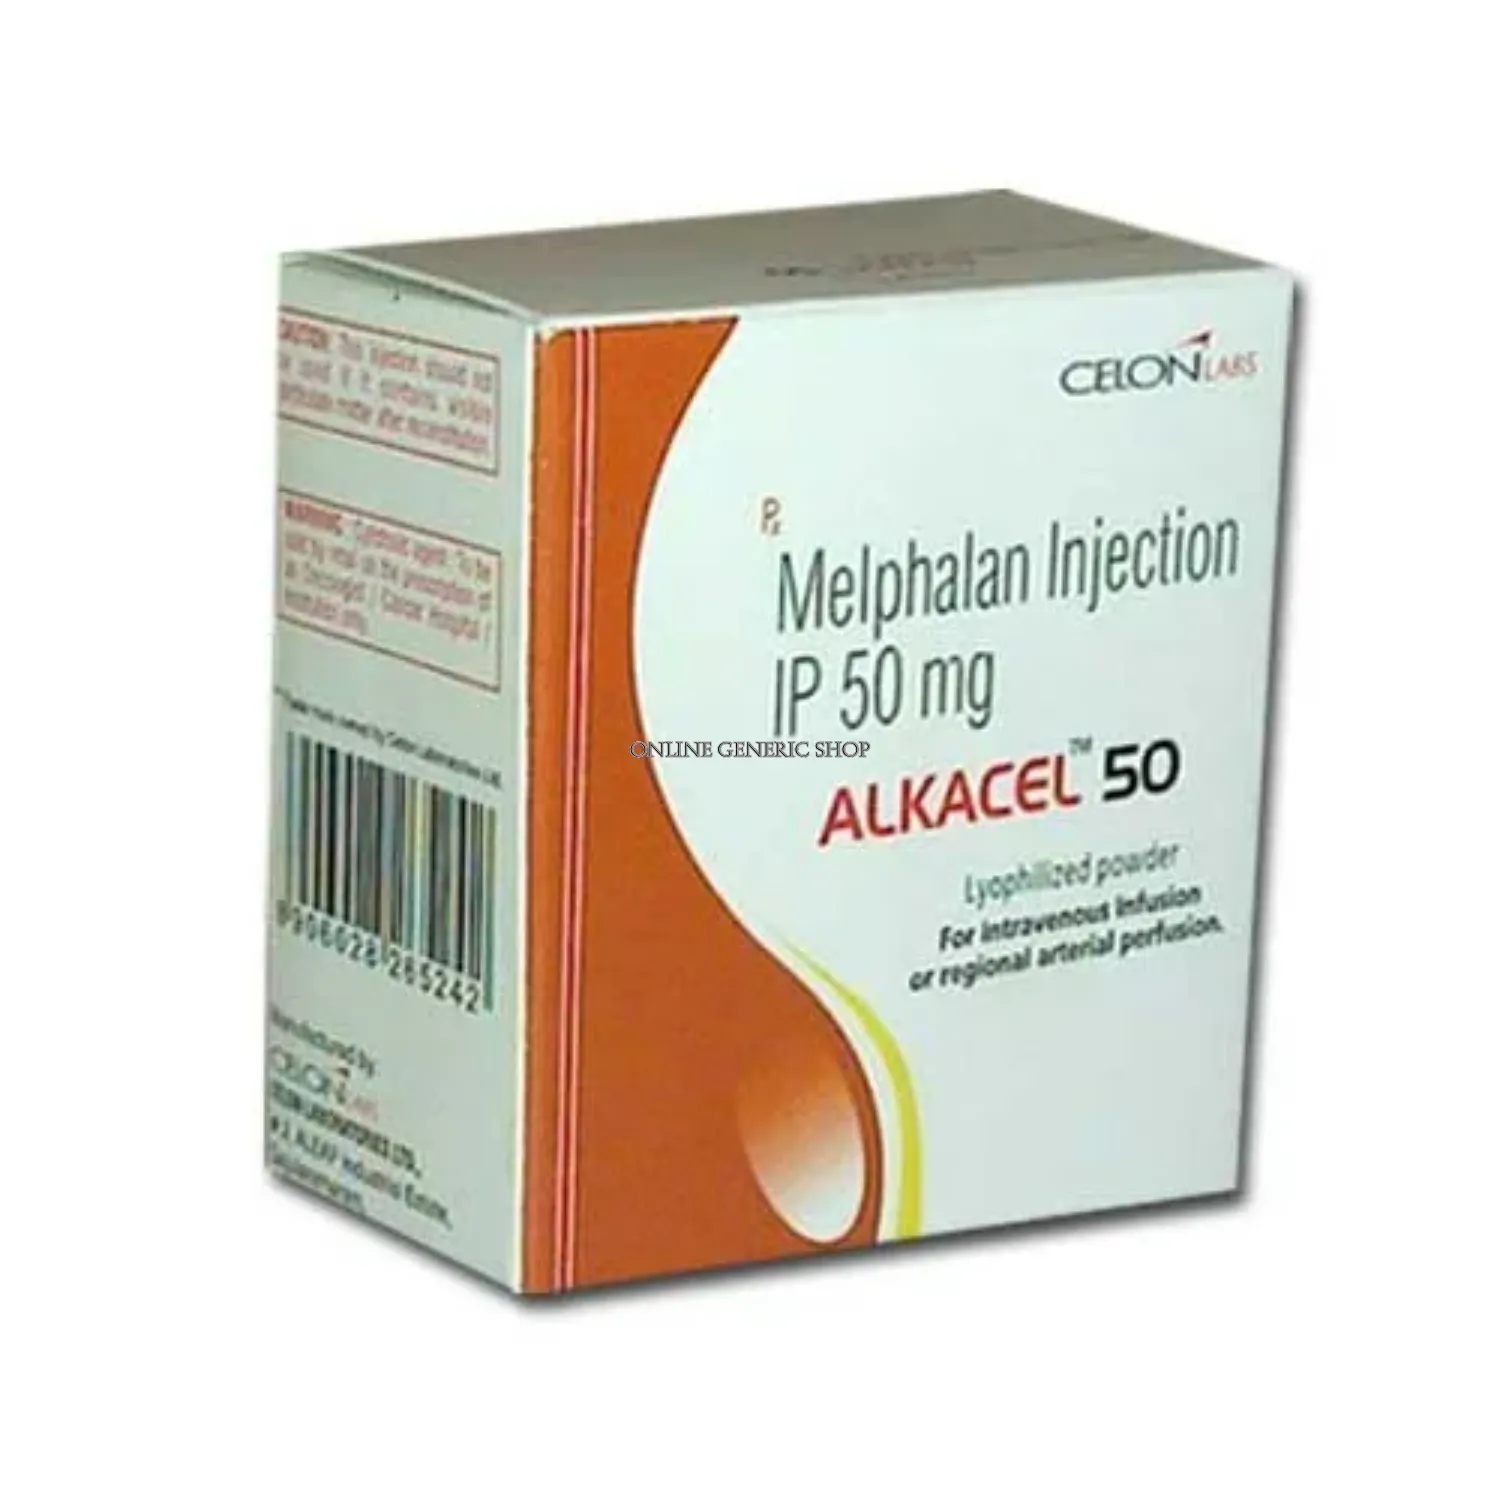 alkacel-50-mg-injection                    